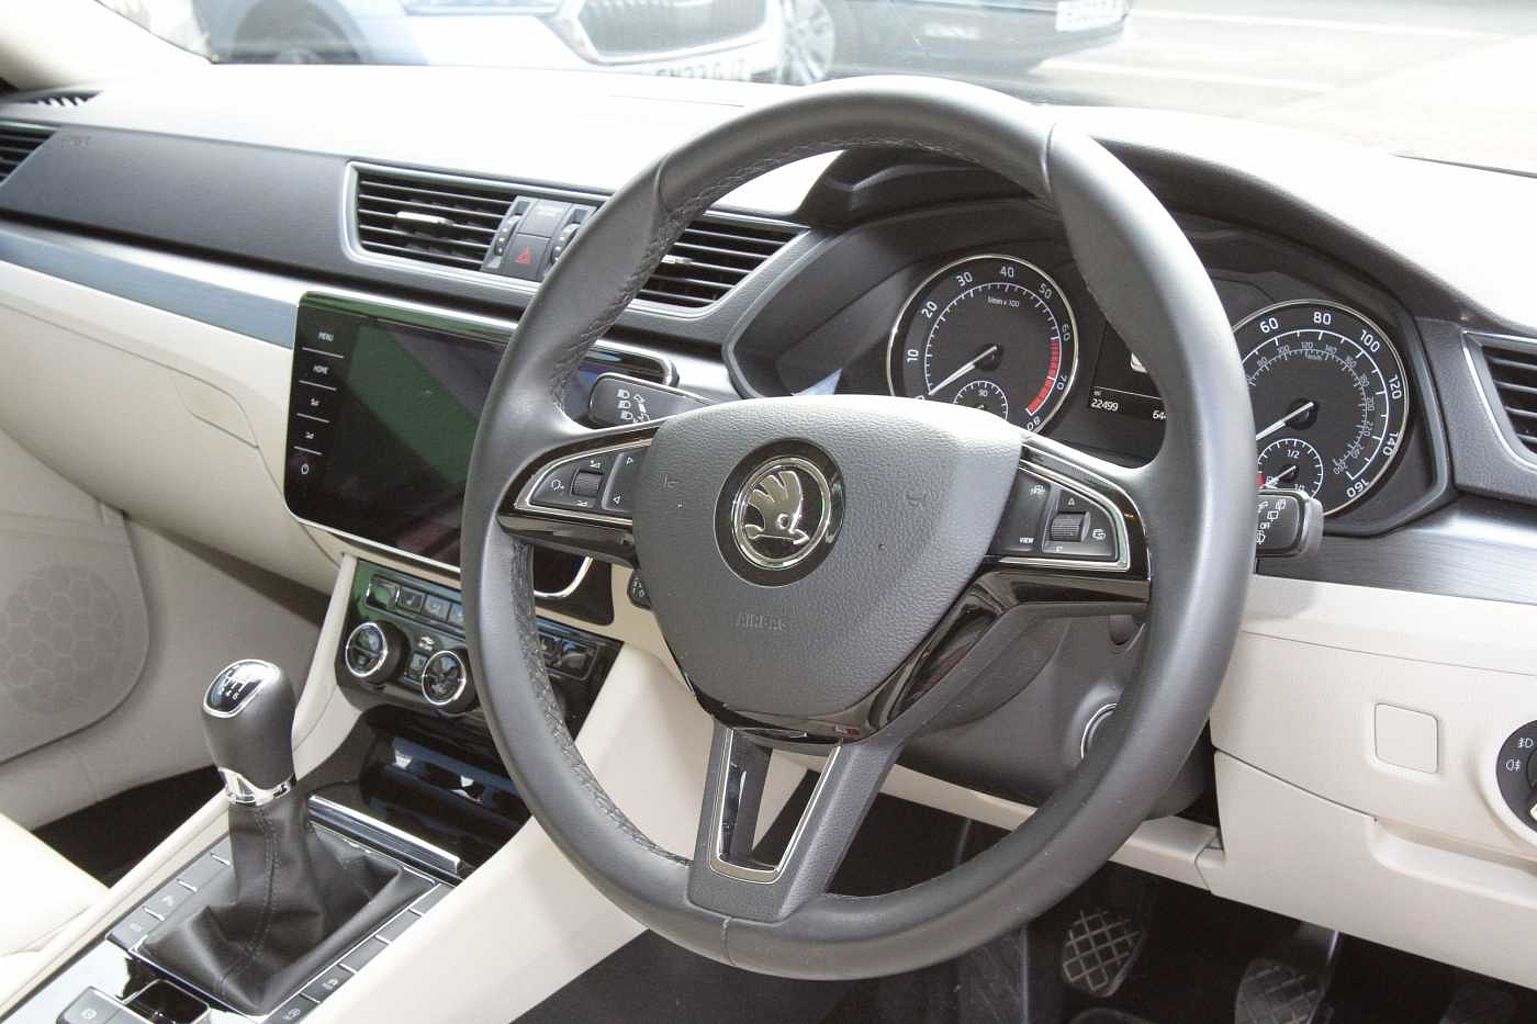 SKODA Superb 1.5 TSI (150ps) SE L Executive Hatchback